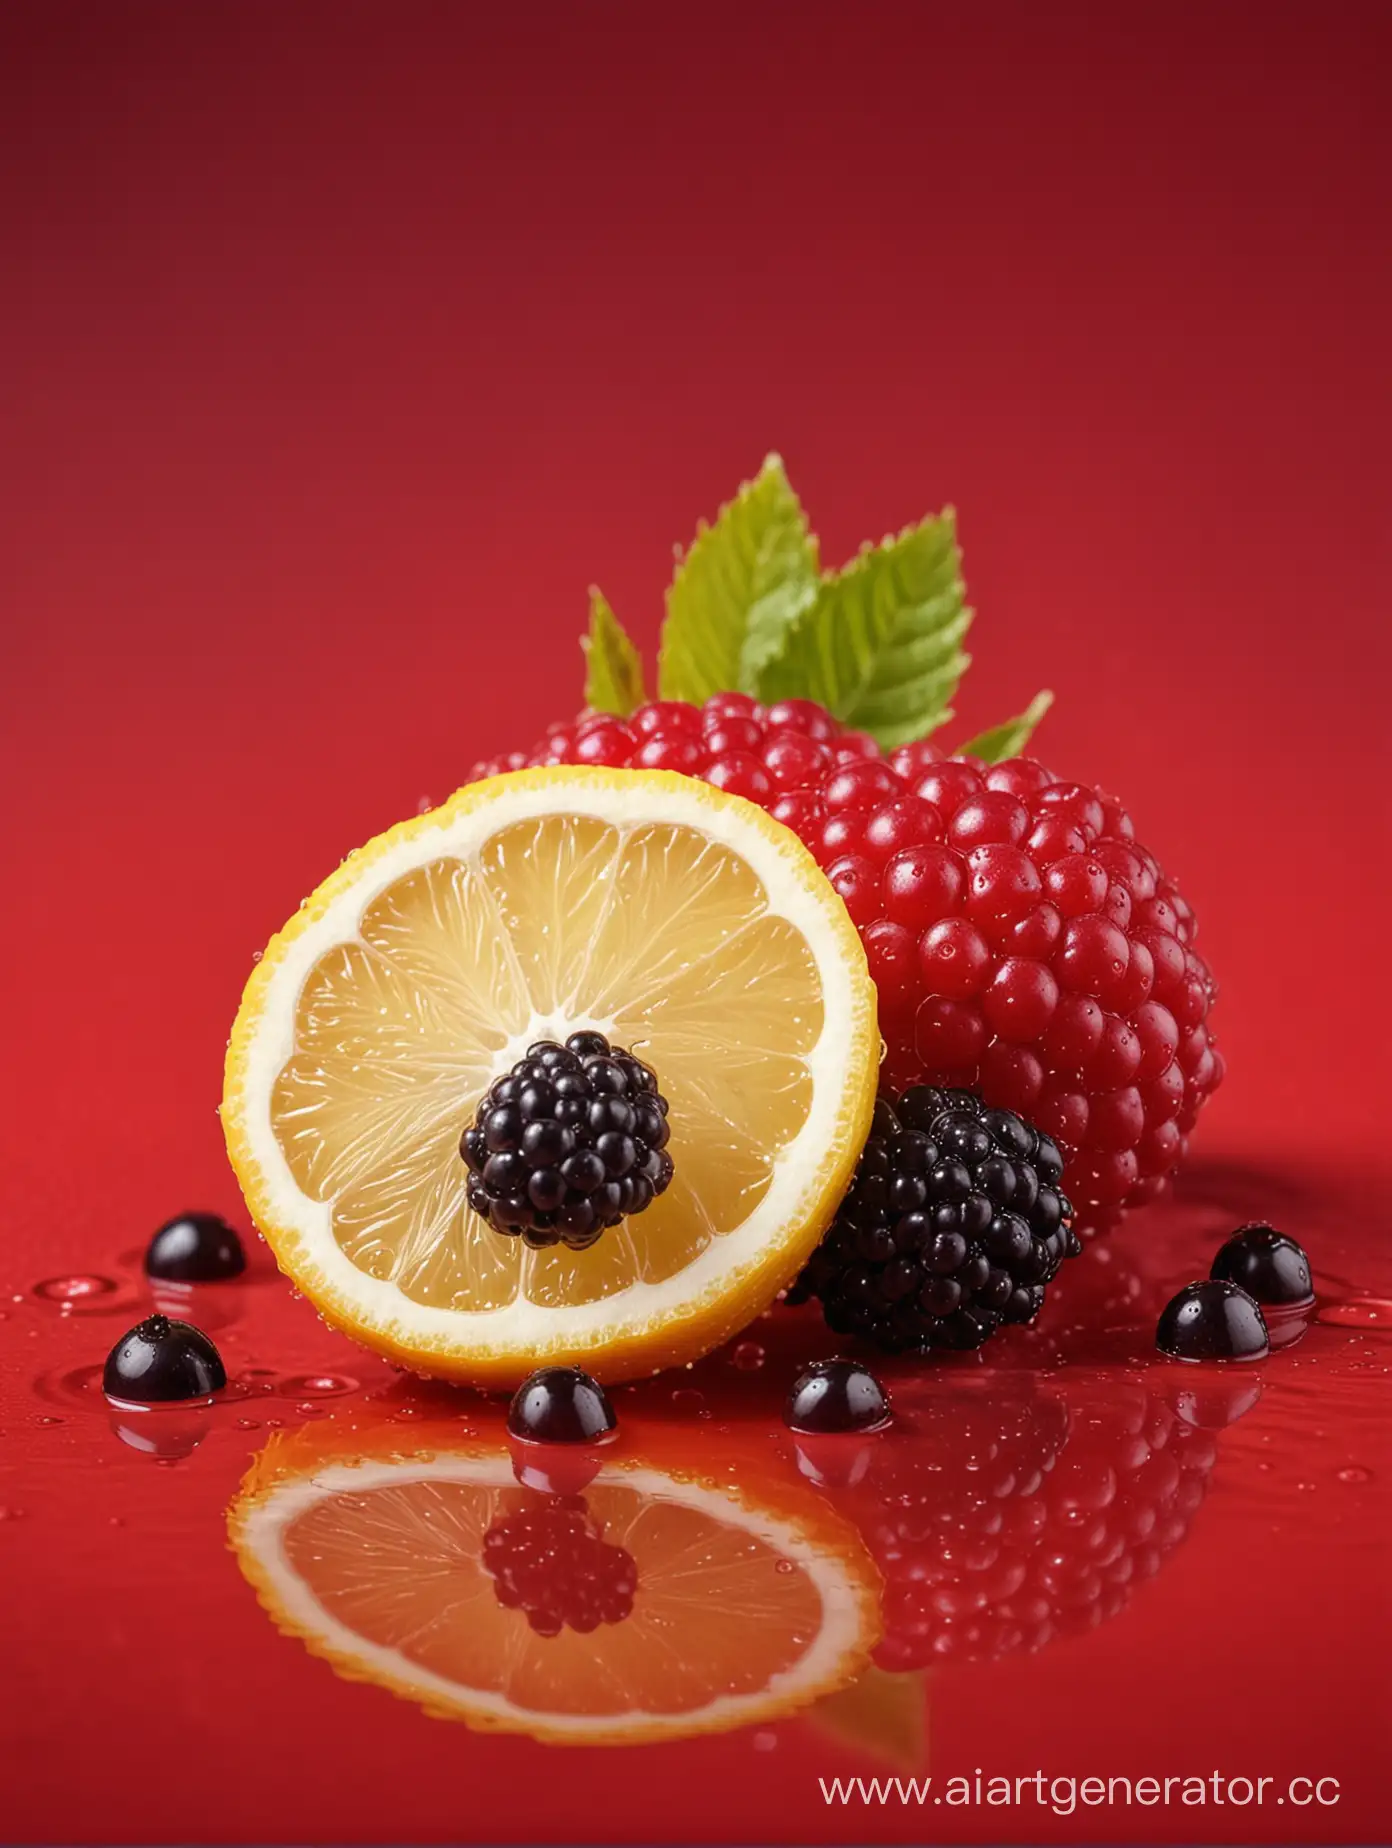 Boysenberry-and-Lemon-Slices-on-Vibrant-Red-Background